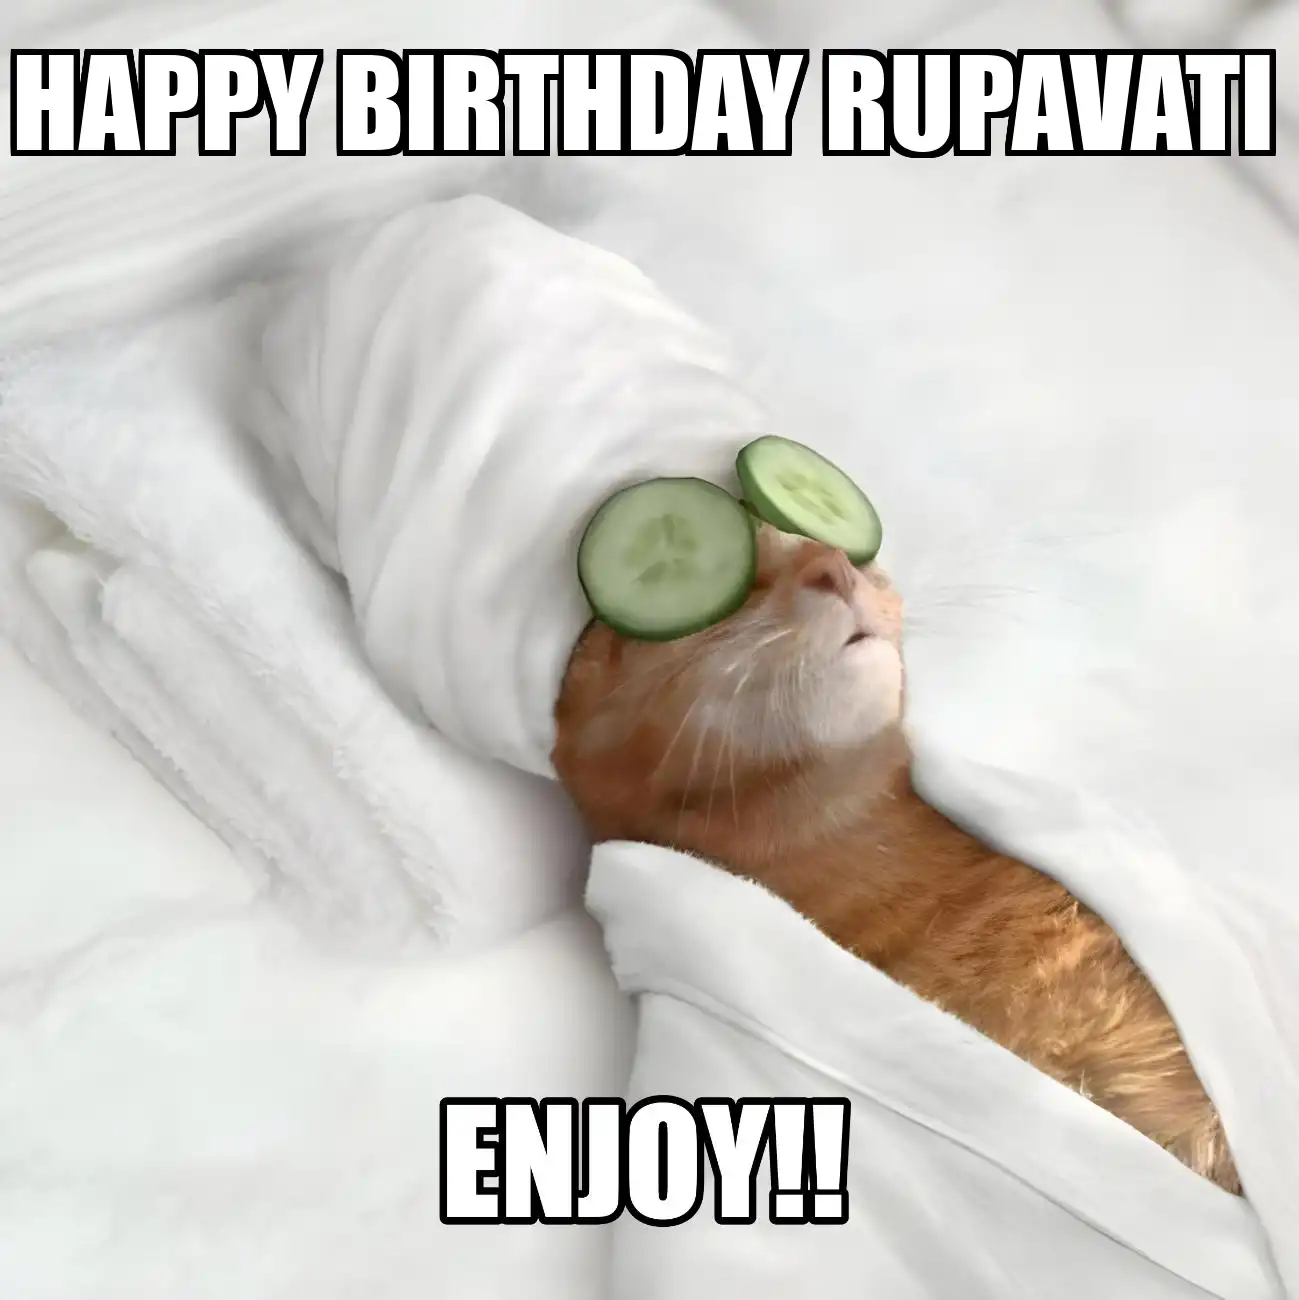 Happy Birthday Rupavati Enjoy Cat Meme